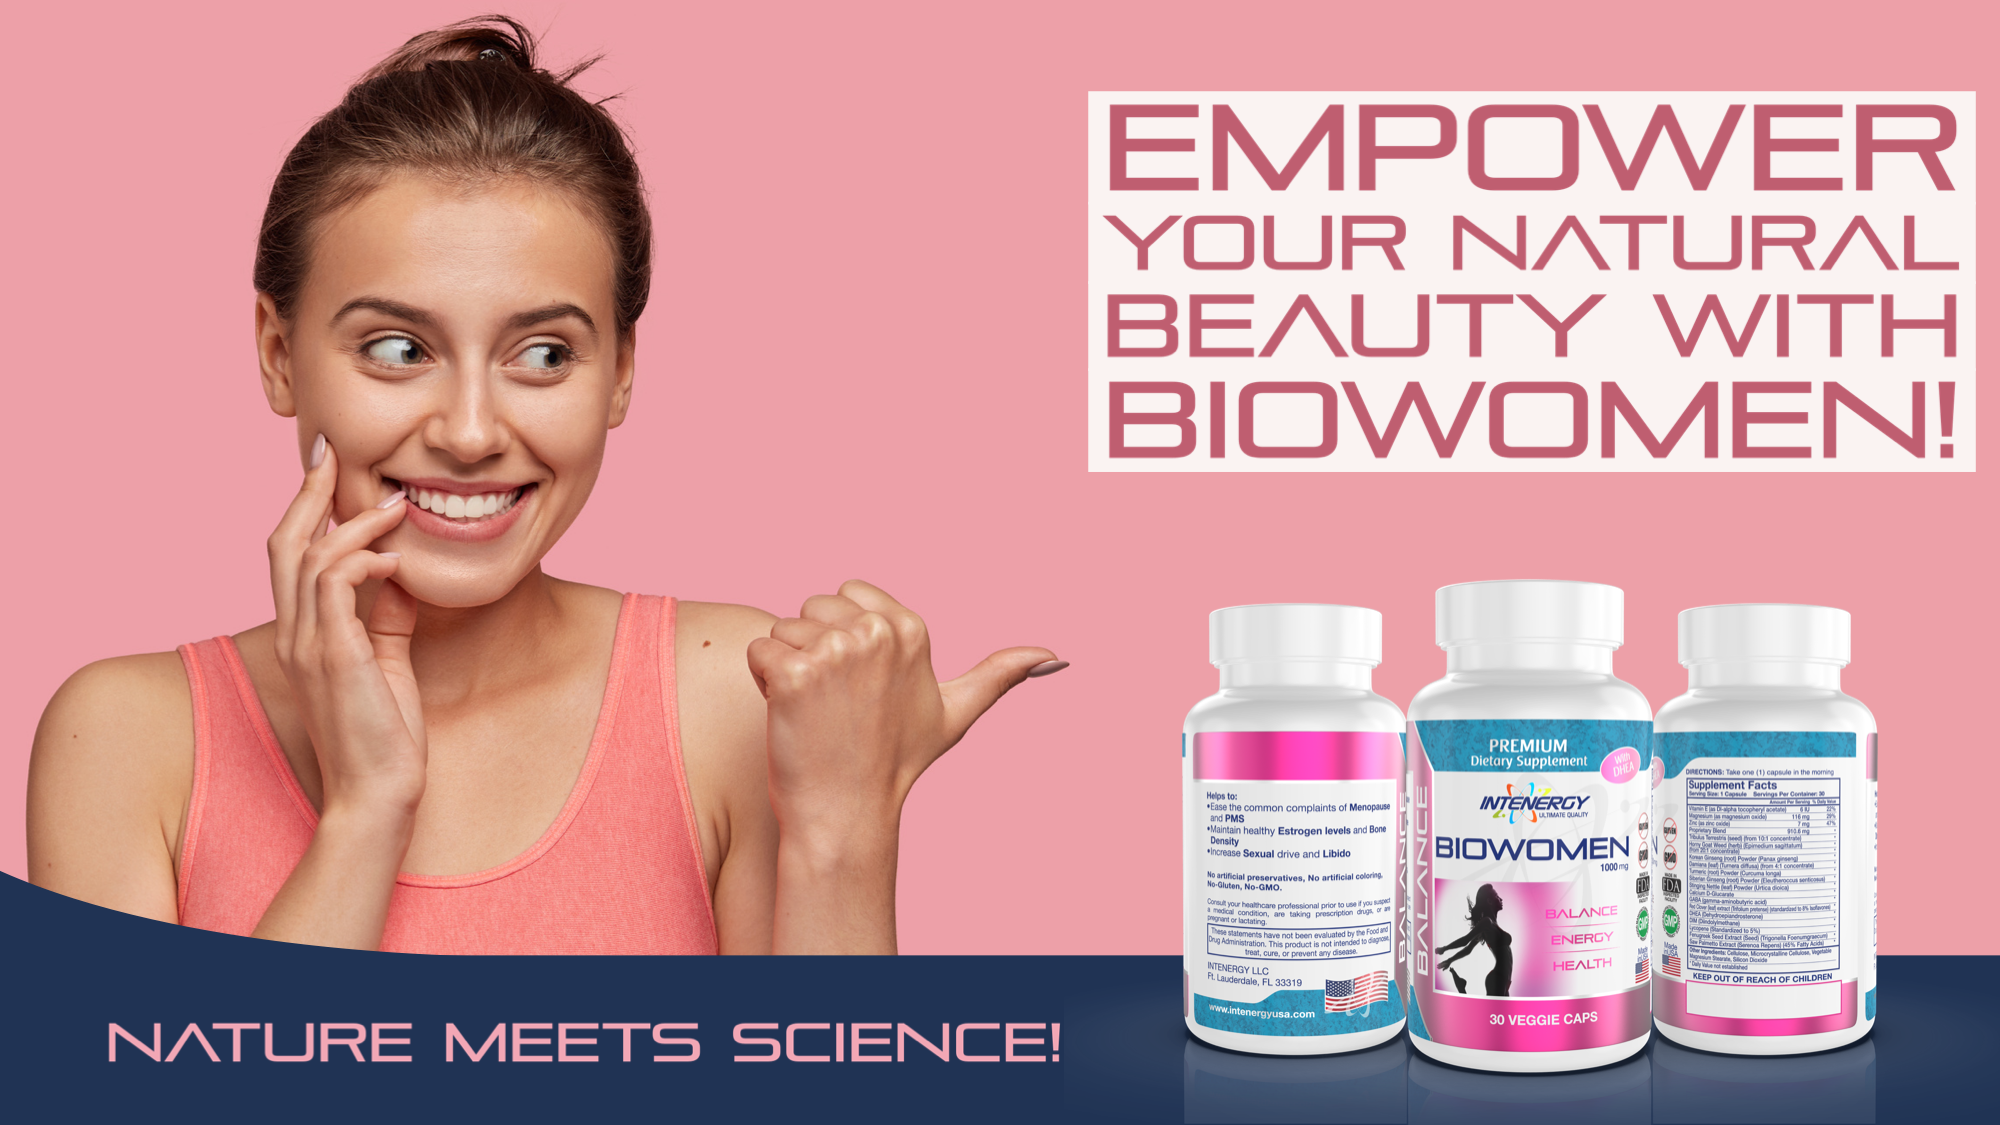 Intenergy Biowomen Supplement for Women and Women's Health